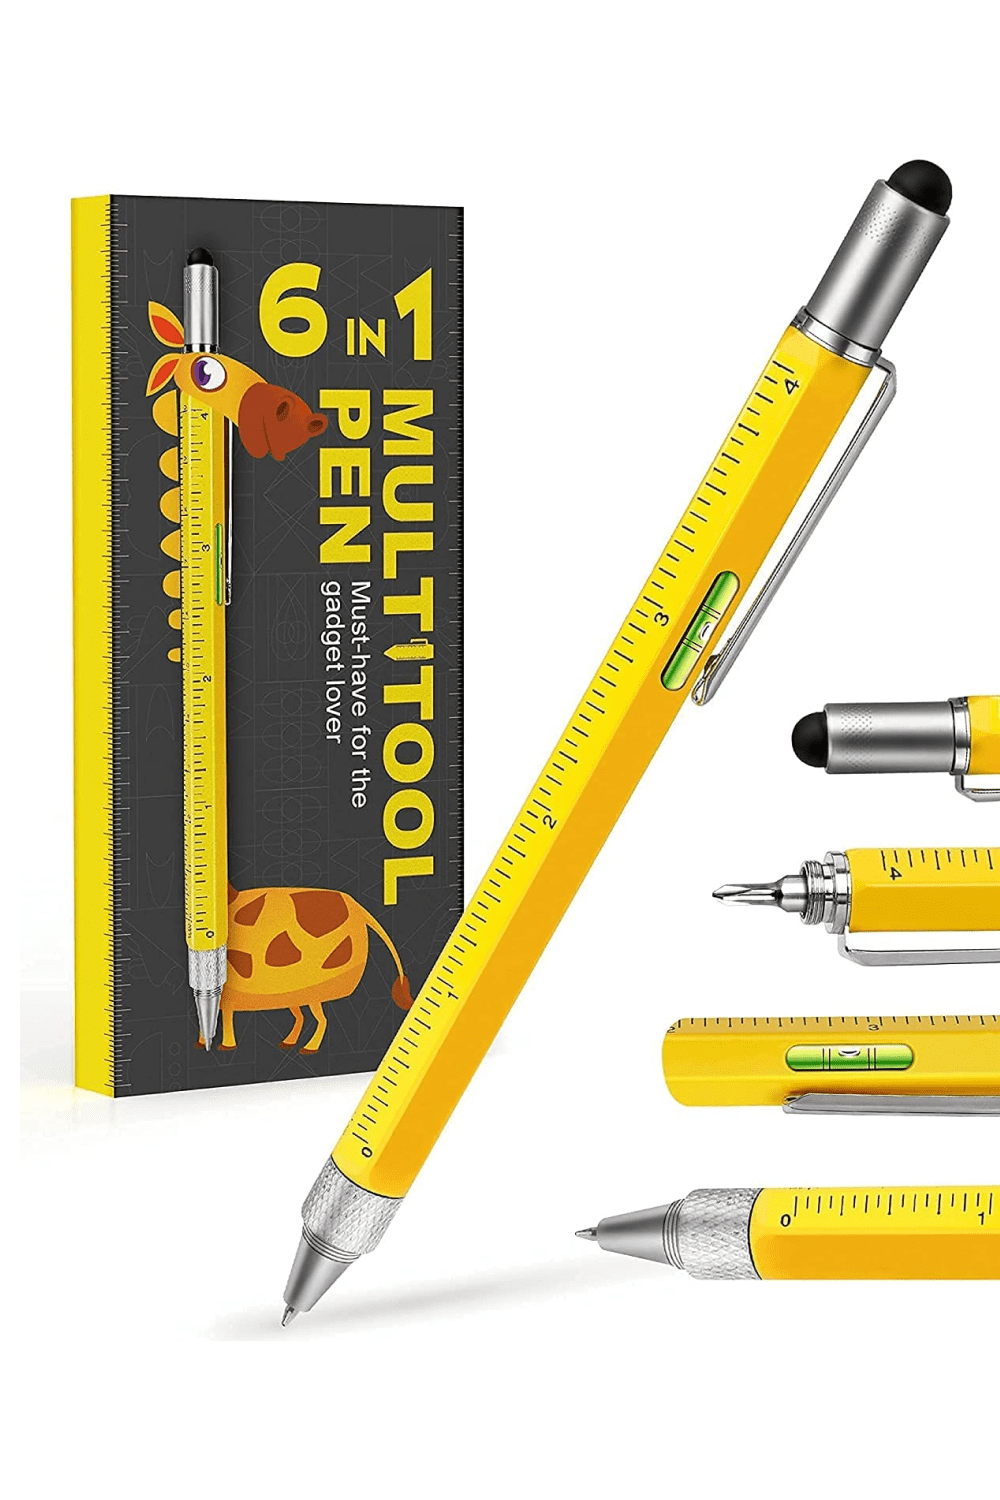 Multitool Pen with Stylus, Ruler, Level, Screwdriver, Ballpoint.